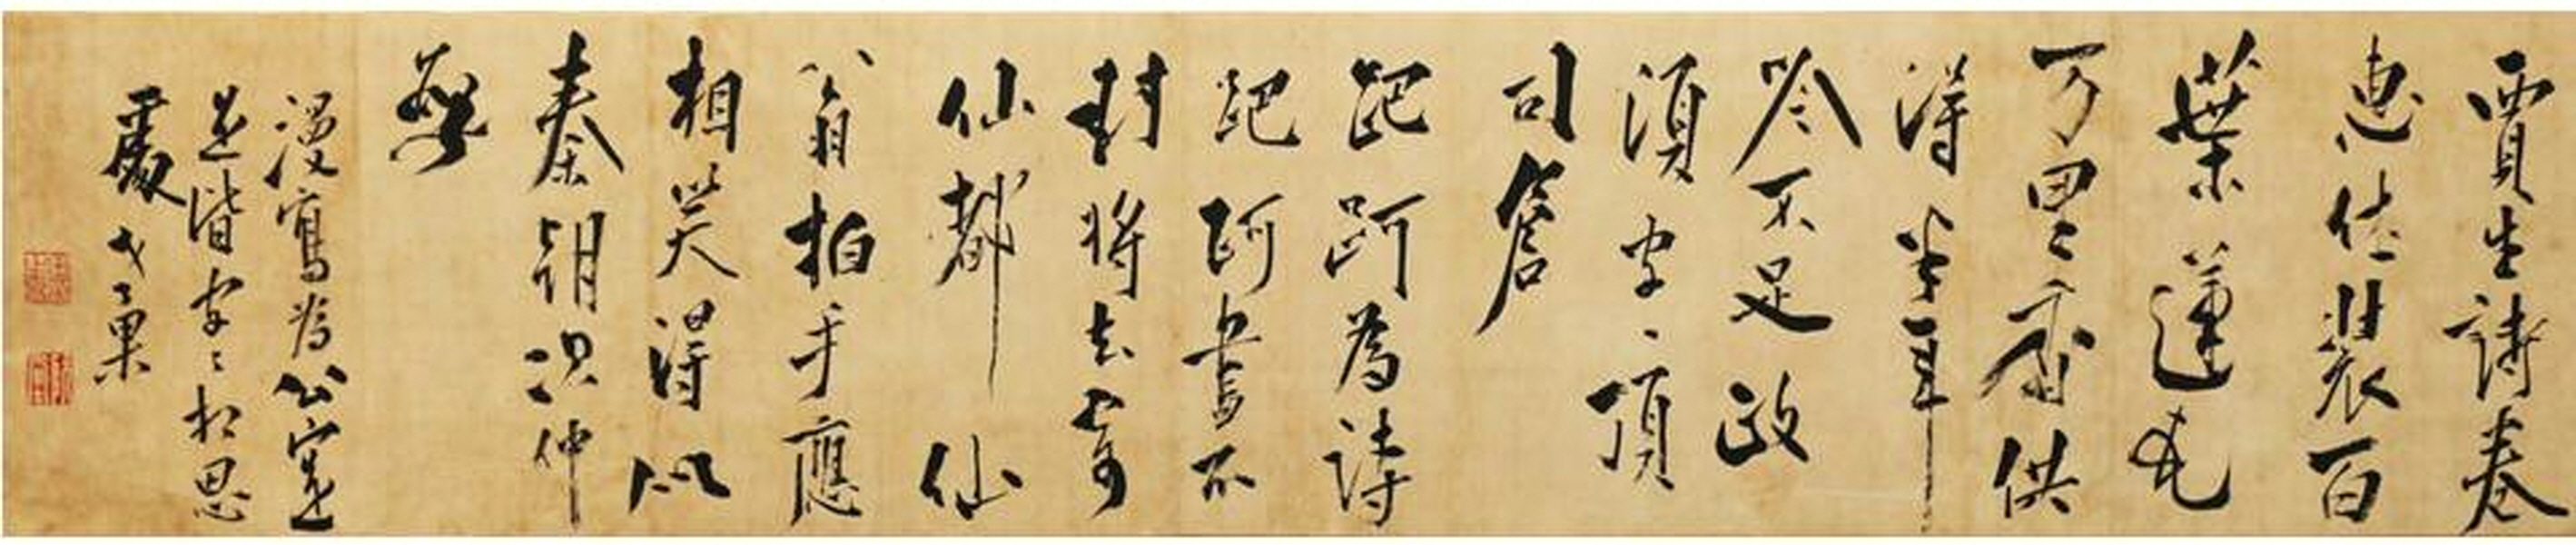 Chusa (秋史) Kim Jeong-hui (金正喜, 1786~1856), Wee-gong=sik- suh 爲公寔書, mid 19th century, ink on paper 紙本墨書, 27.5x127.5cm ⓒHakgojae Gallery